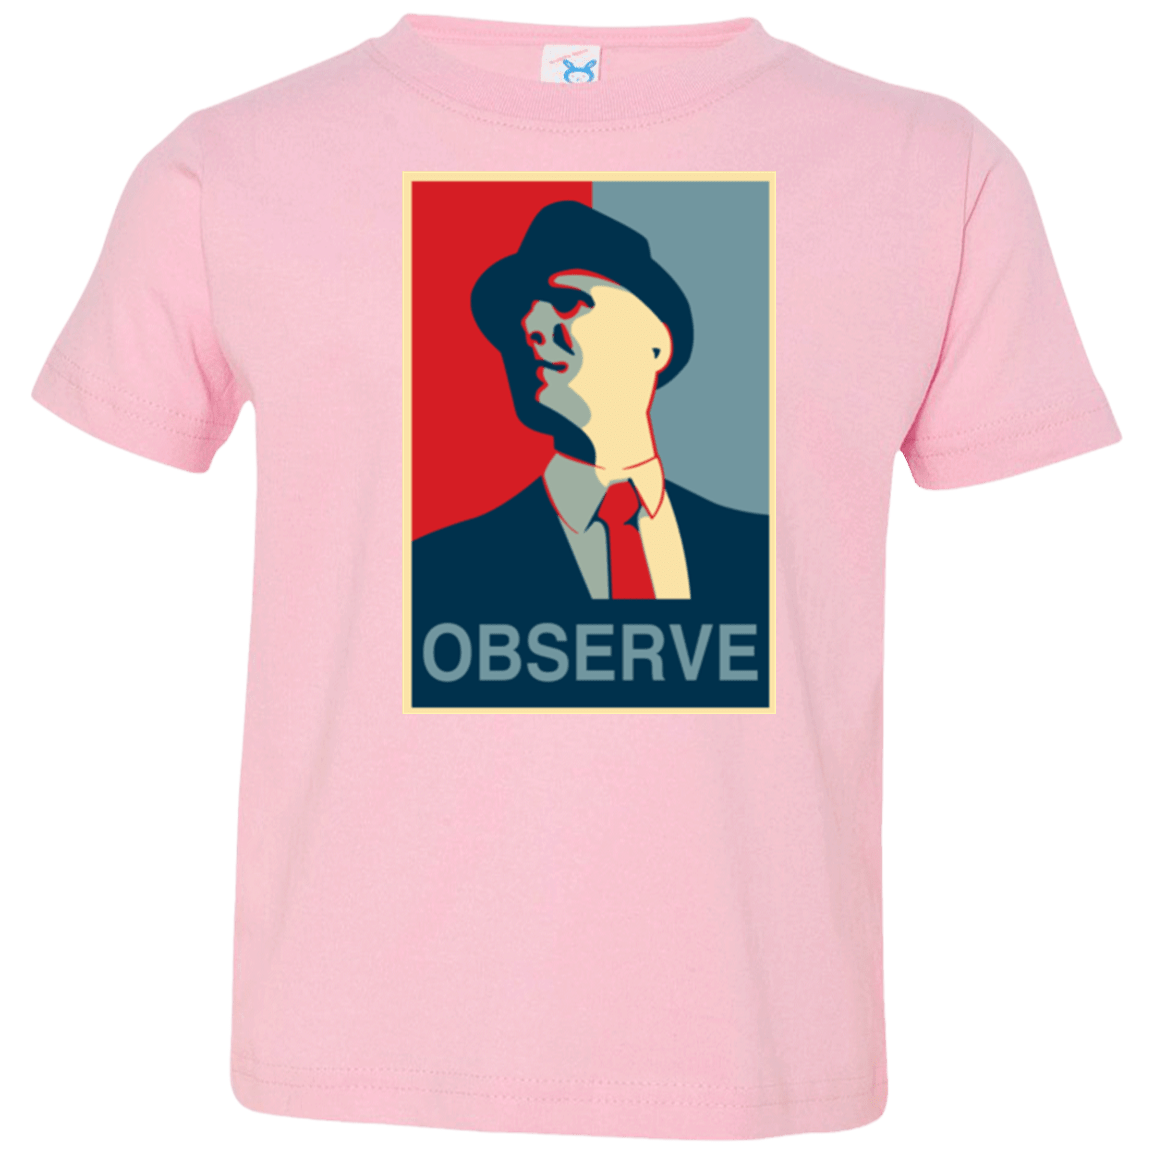 Observe Toddler Premium T-Shirt